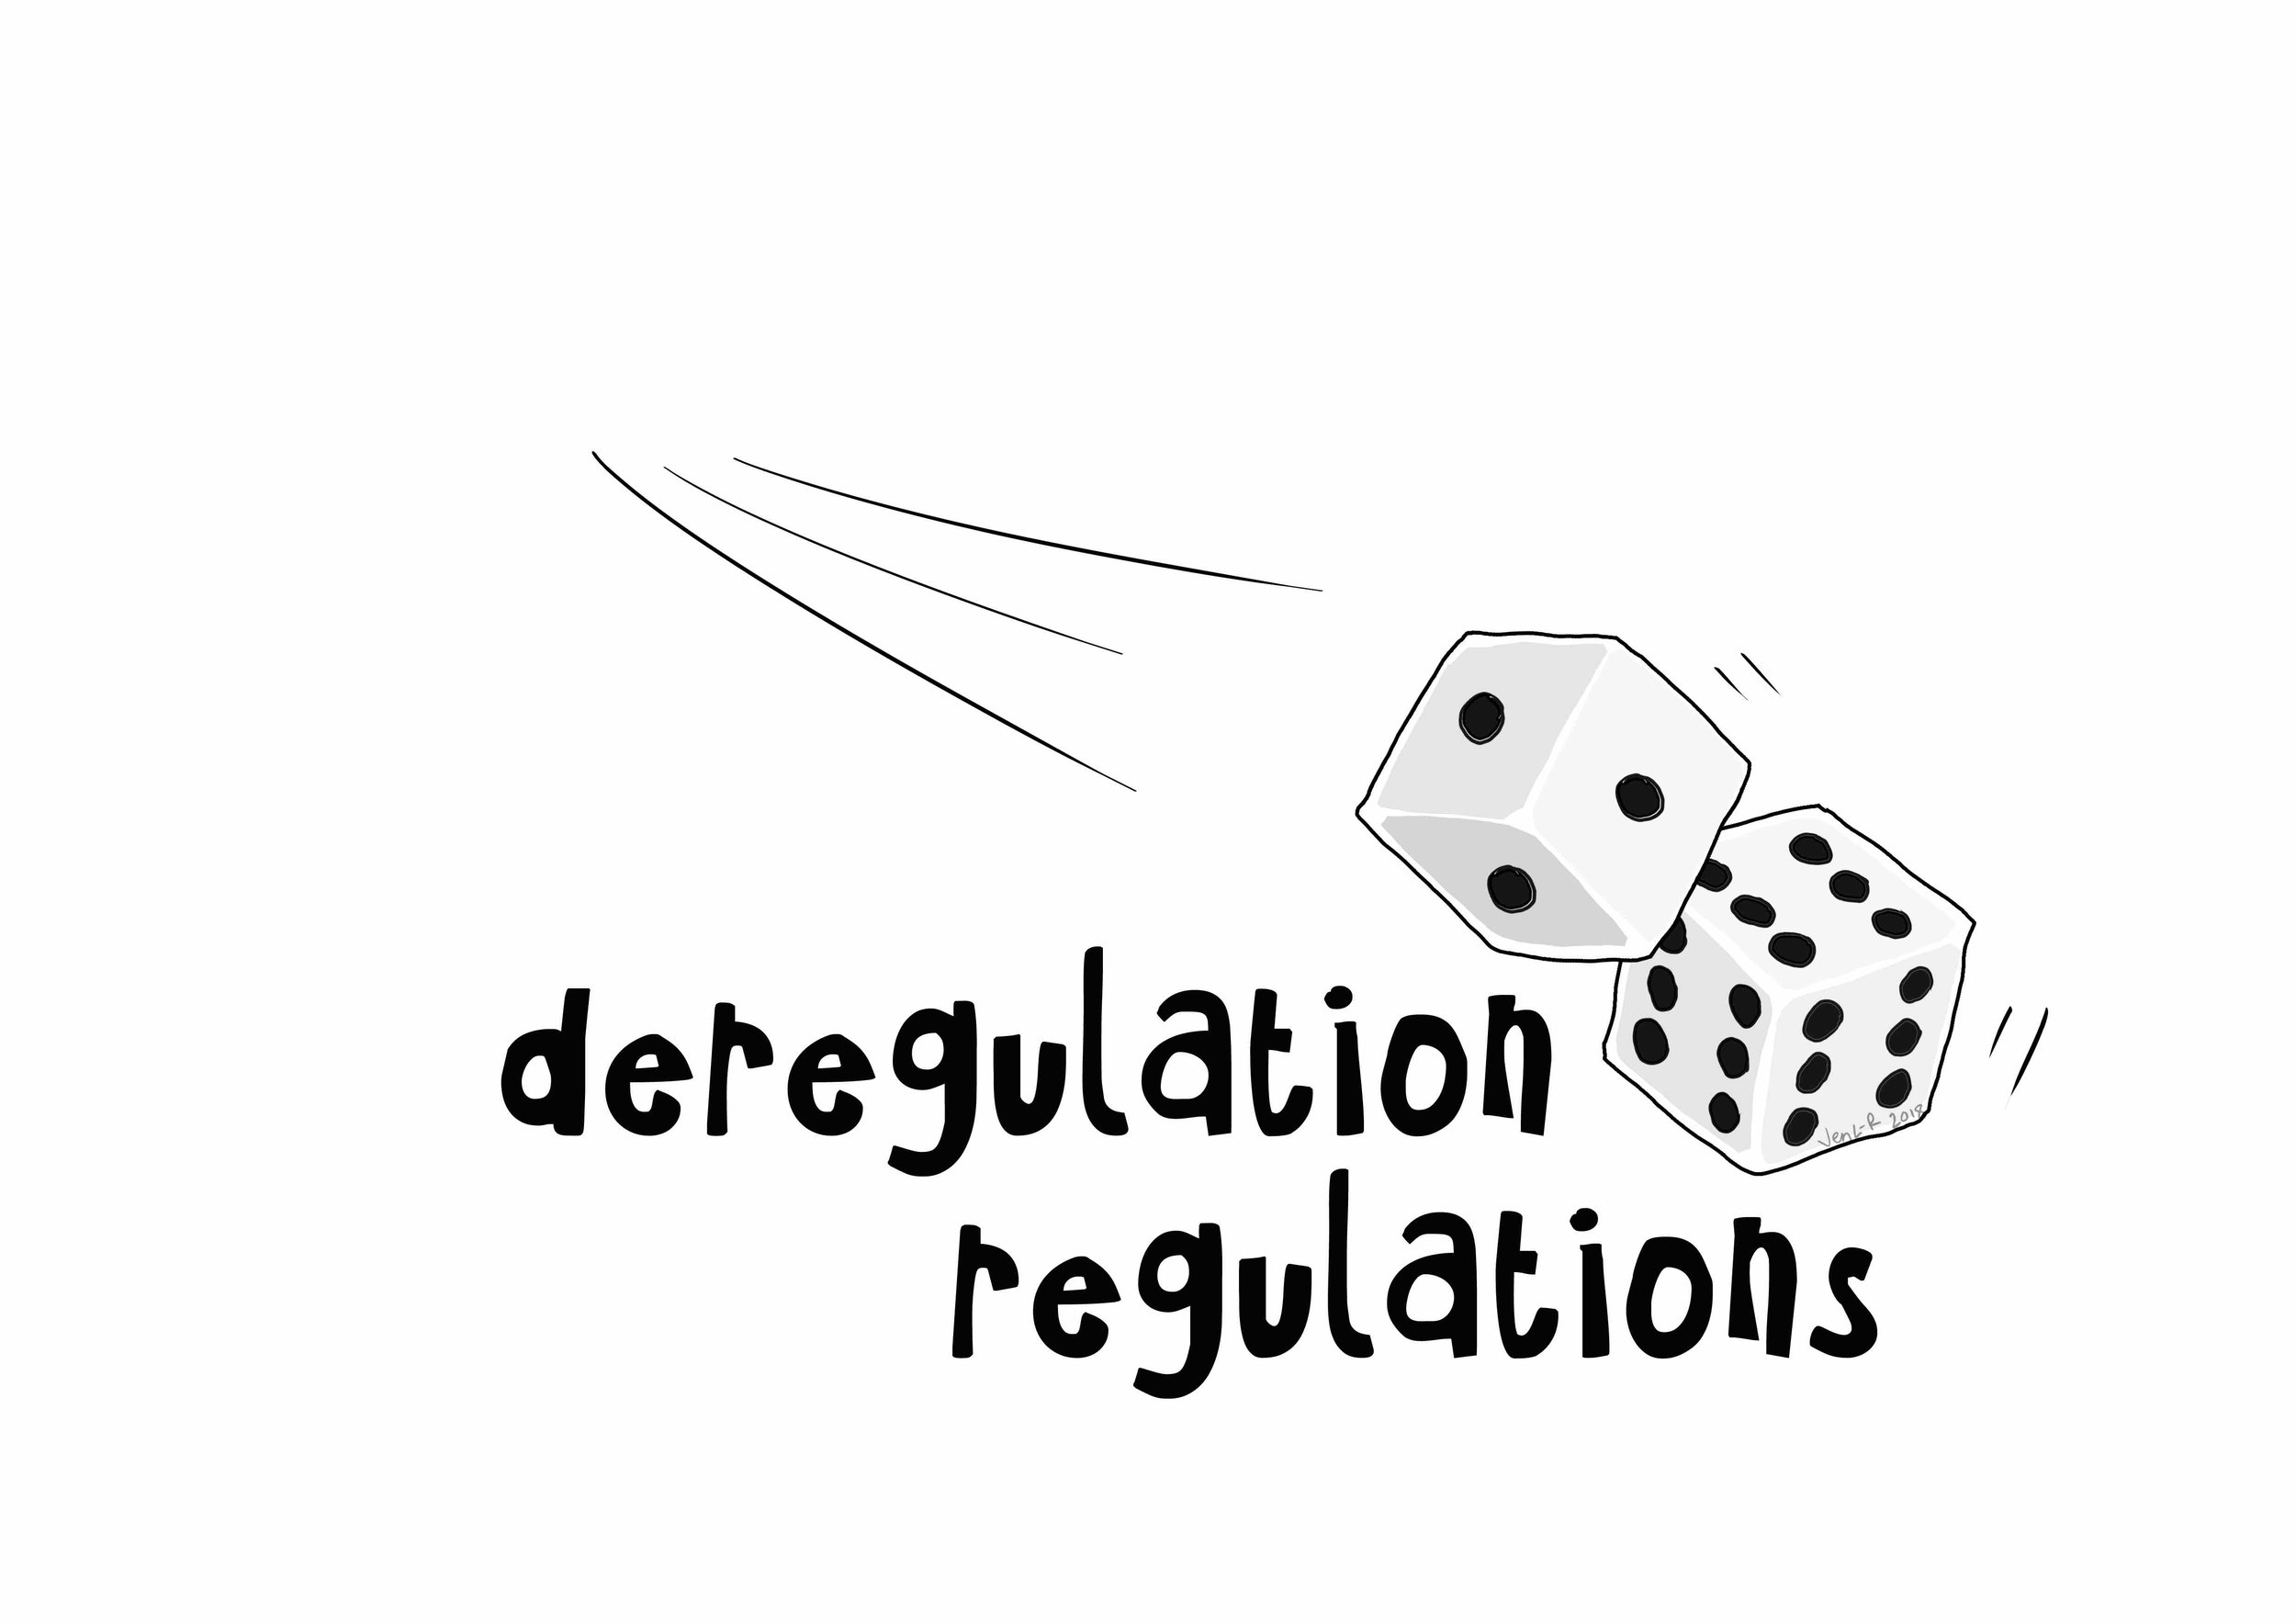 dice-deregulation.jpg